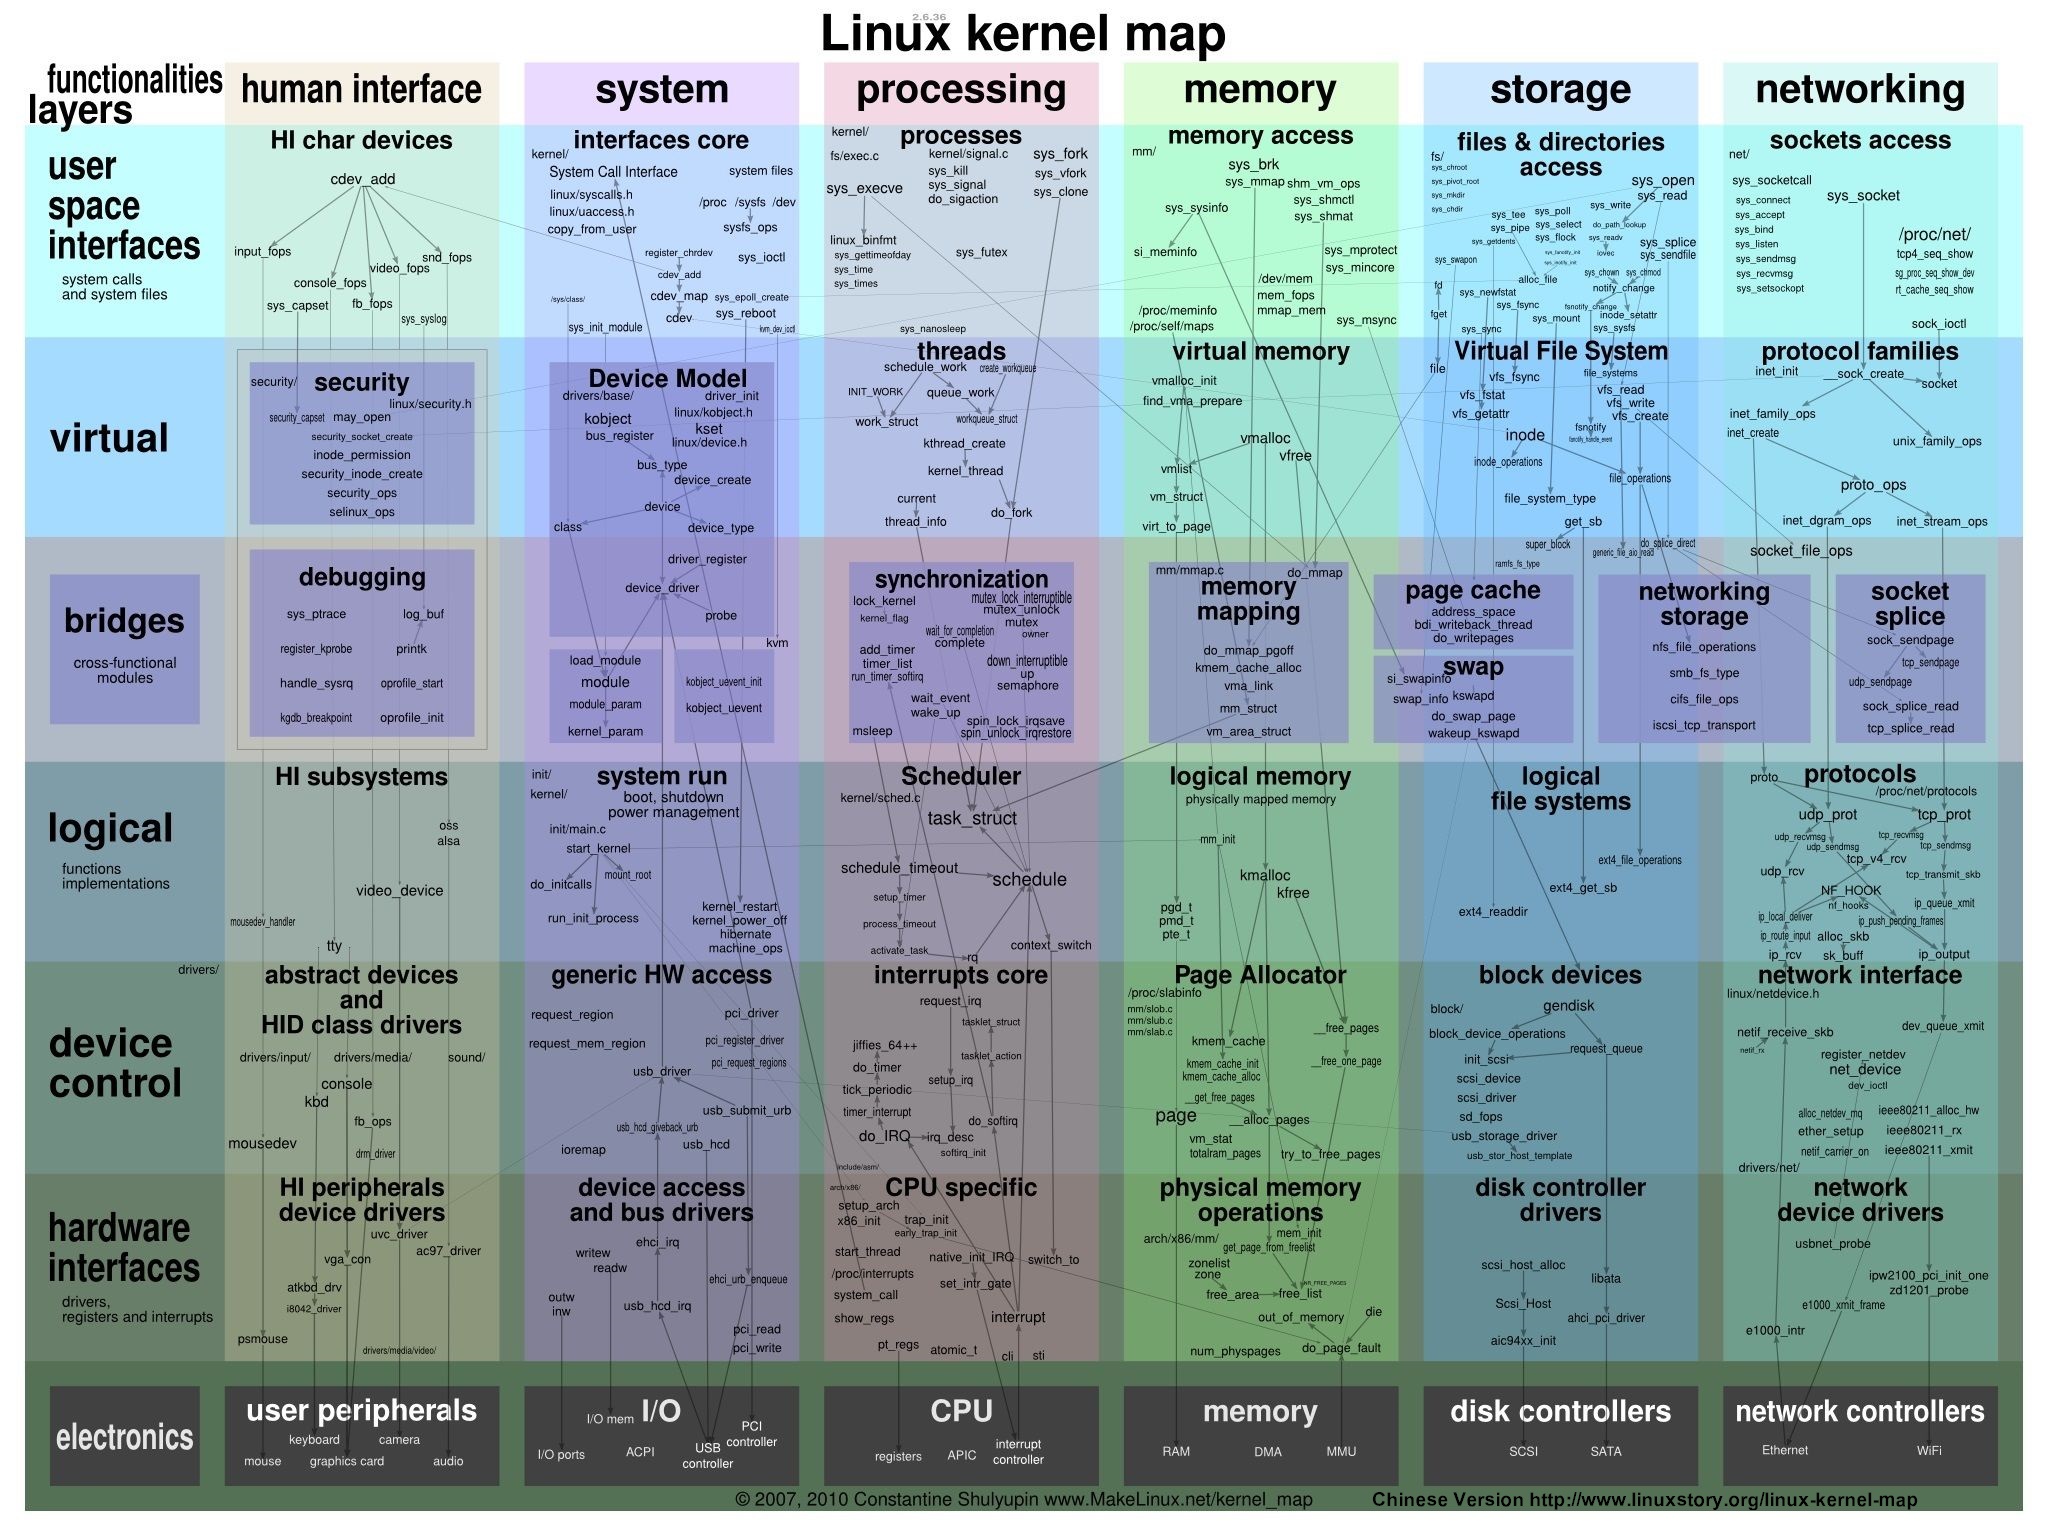 linuxkernelmaplinuxstory.jpg